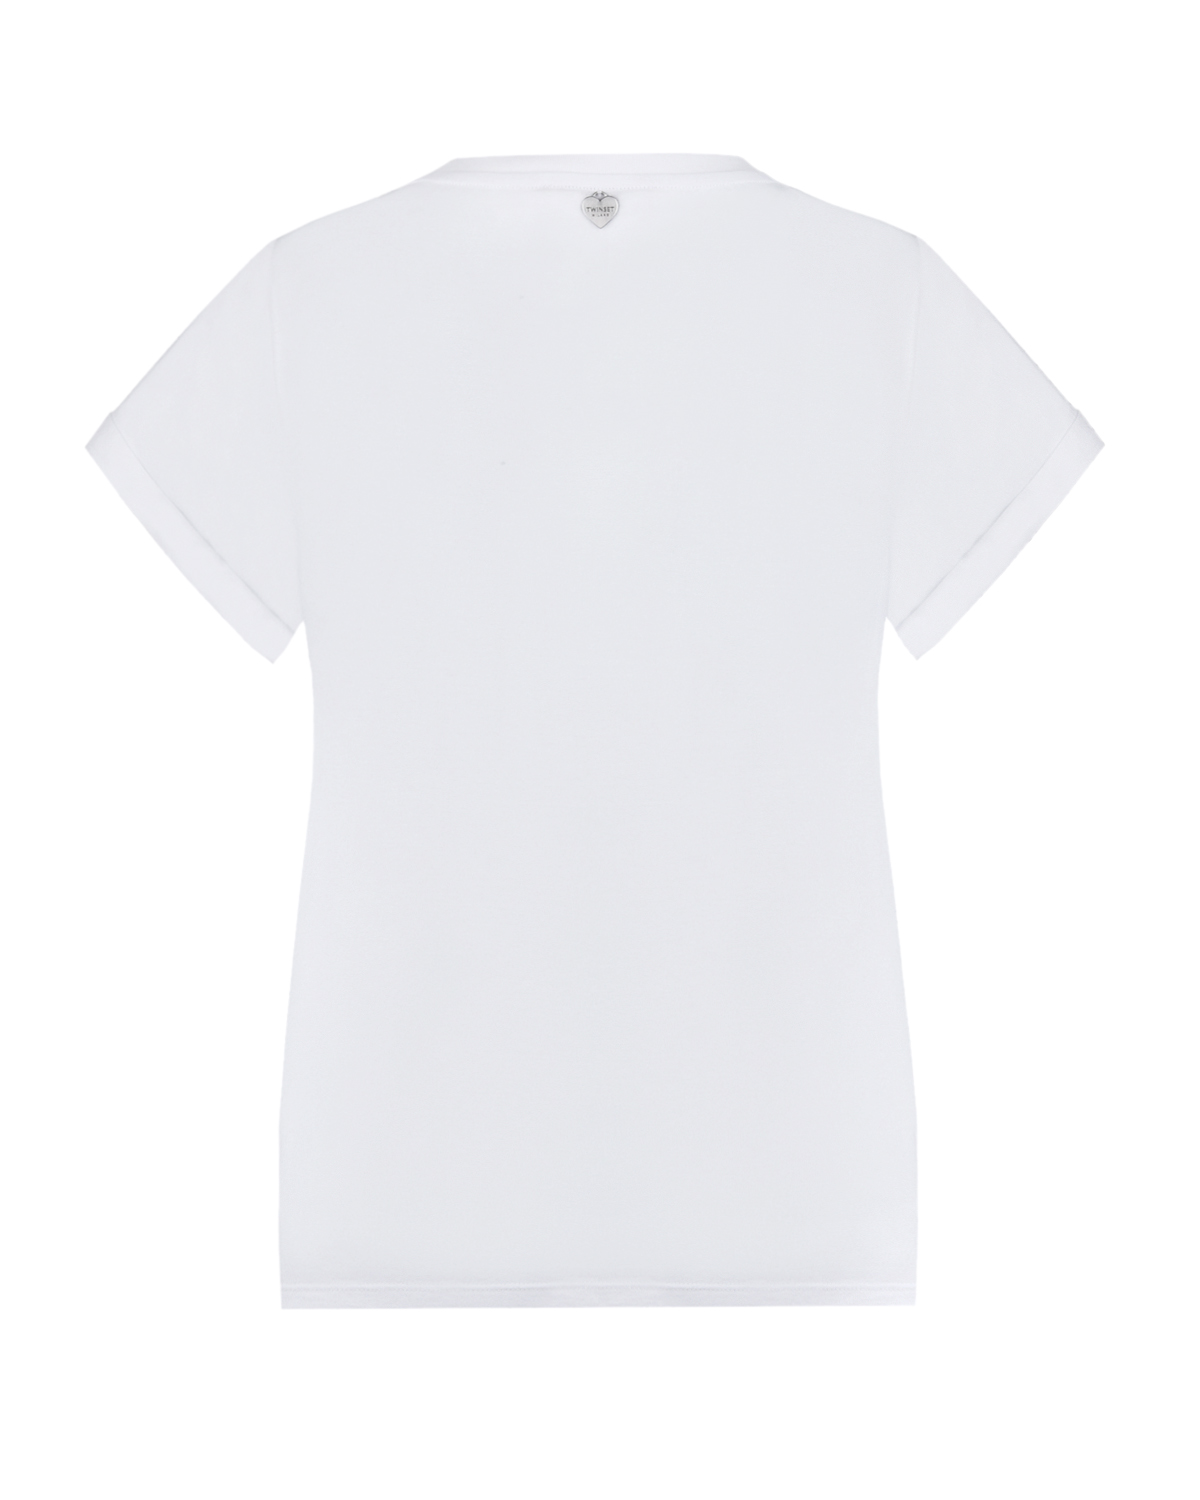 Белая футболка с вышивкой "Звезда" TWINSET, размер 38, цвет белый - фото 6